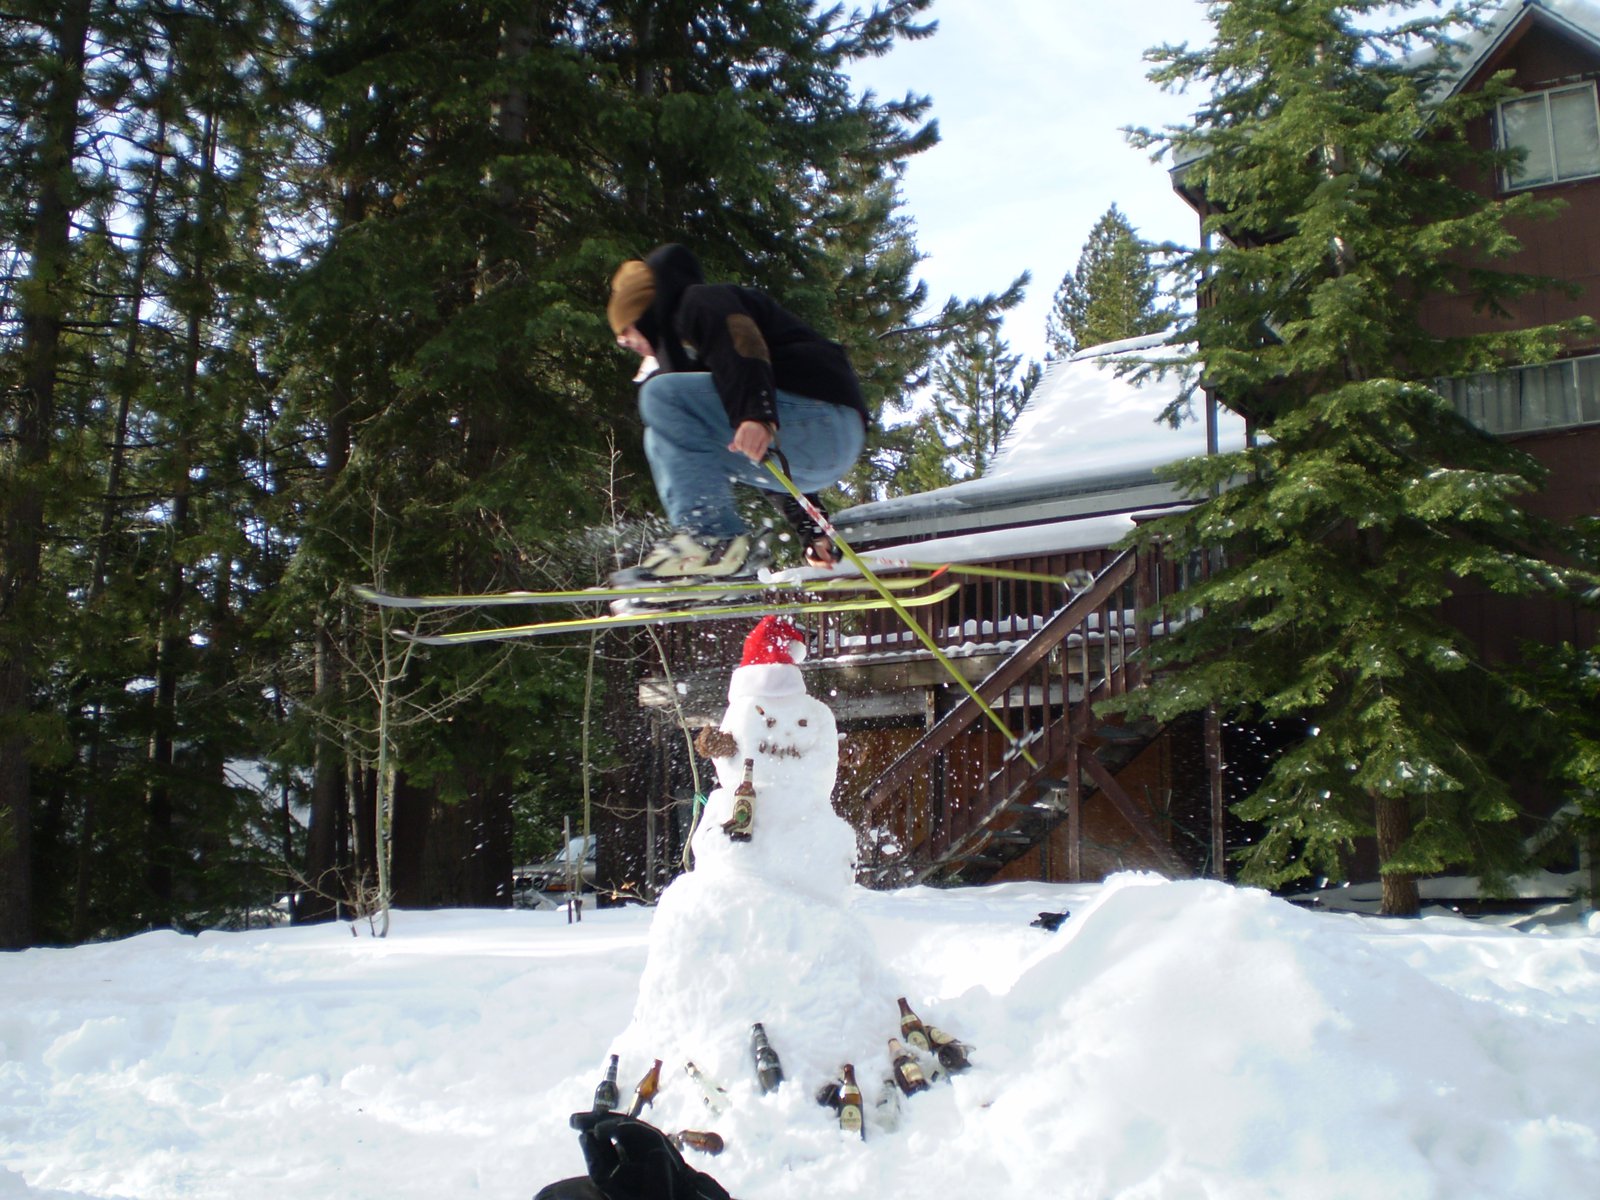 Jumping the druken snowman